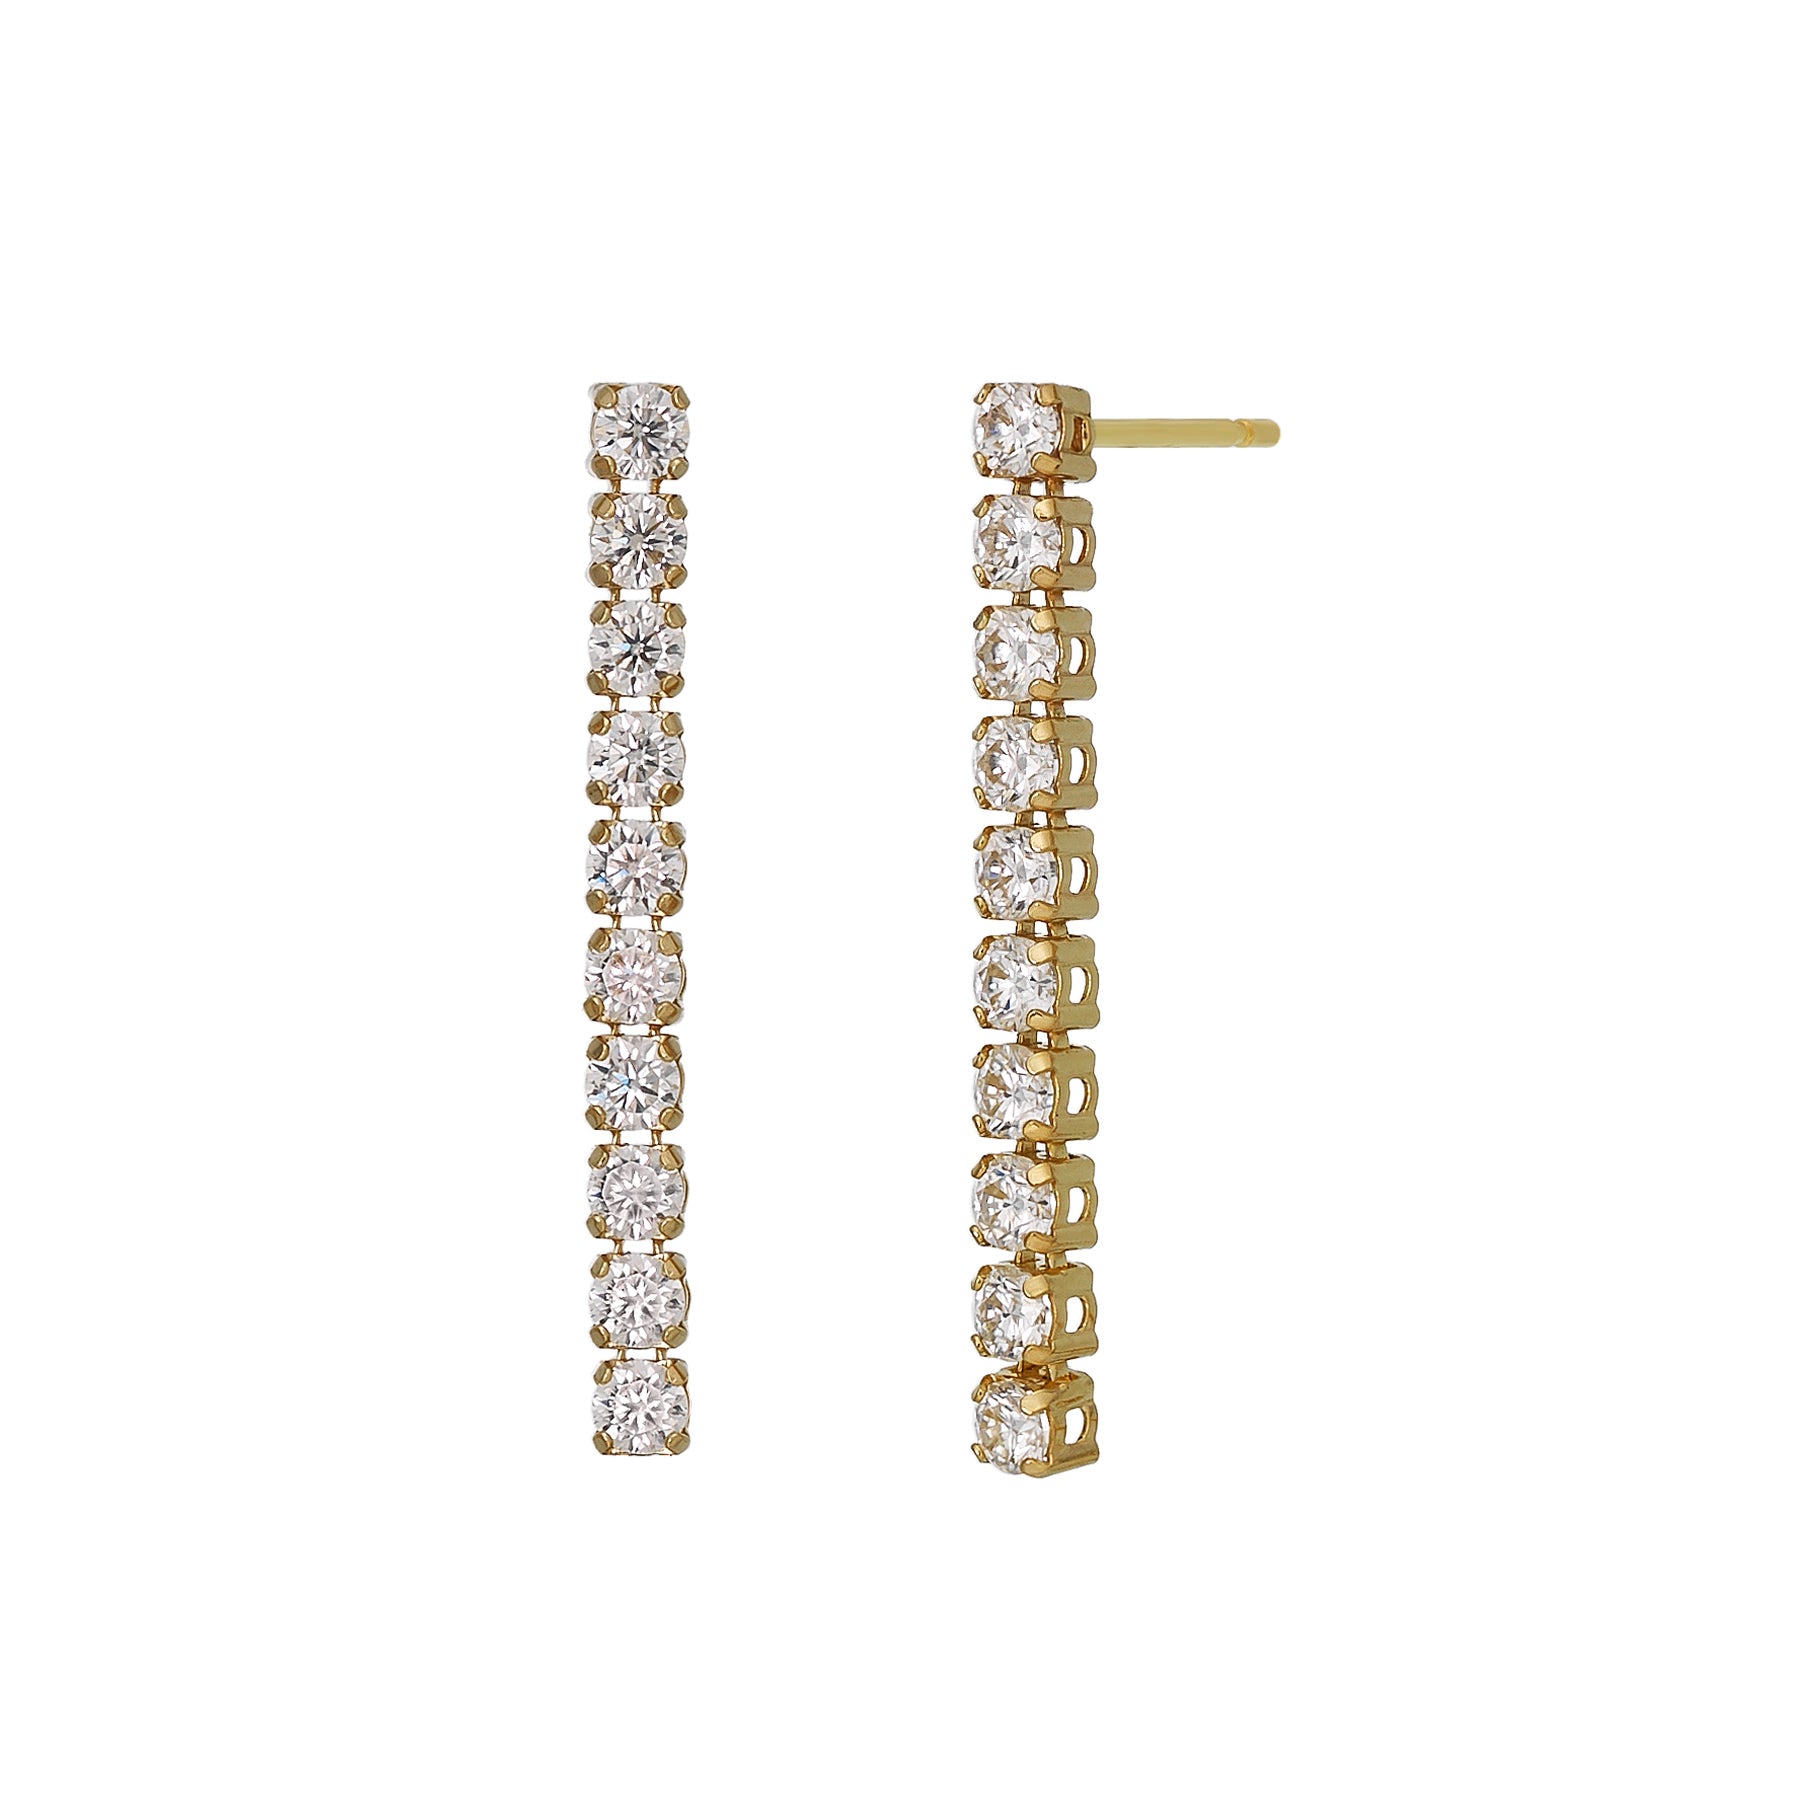 18K/10K Moissanite Tennis Chain Earrings (Yellow Gold) - Product Image